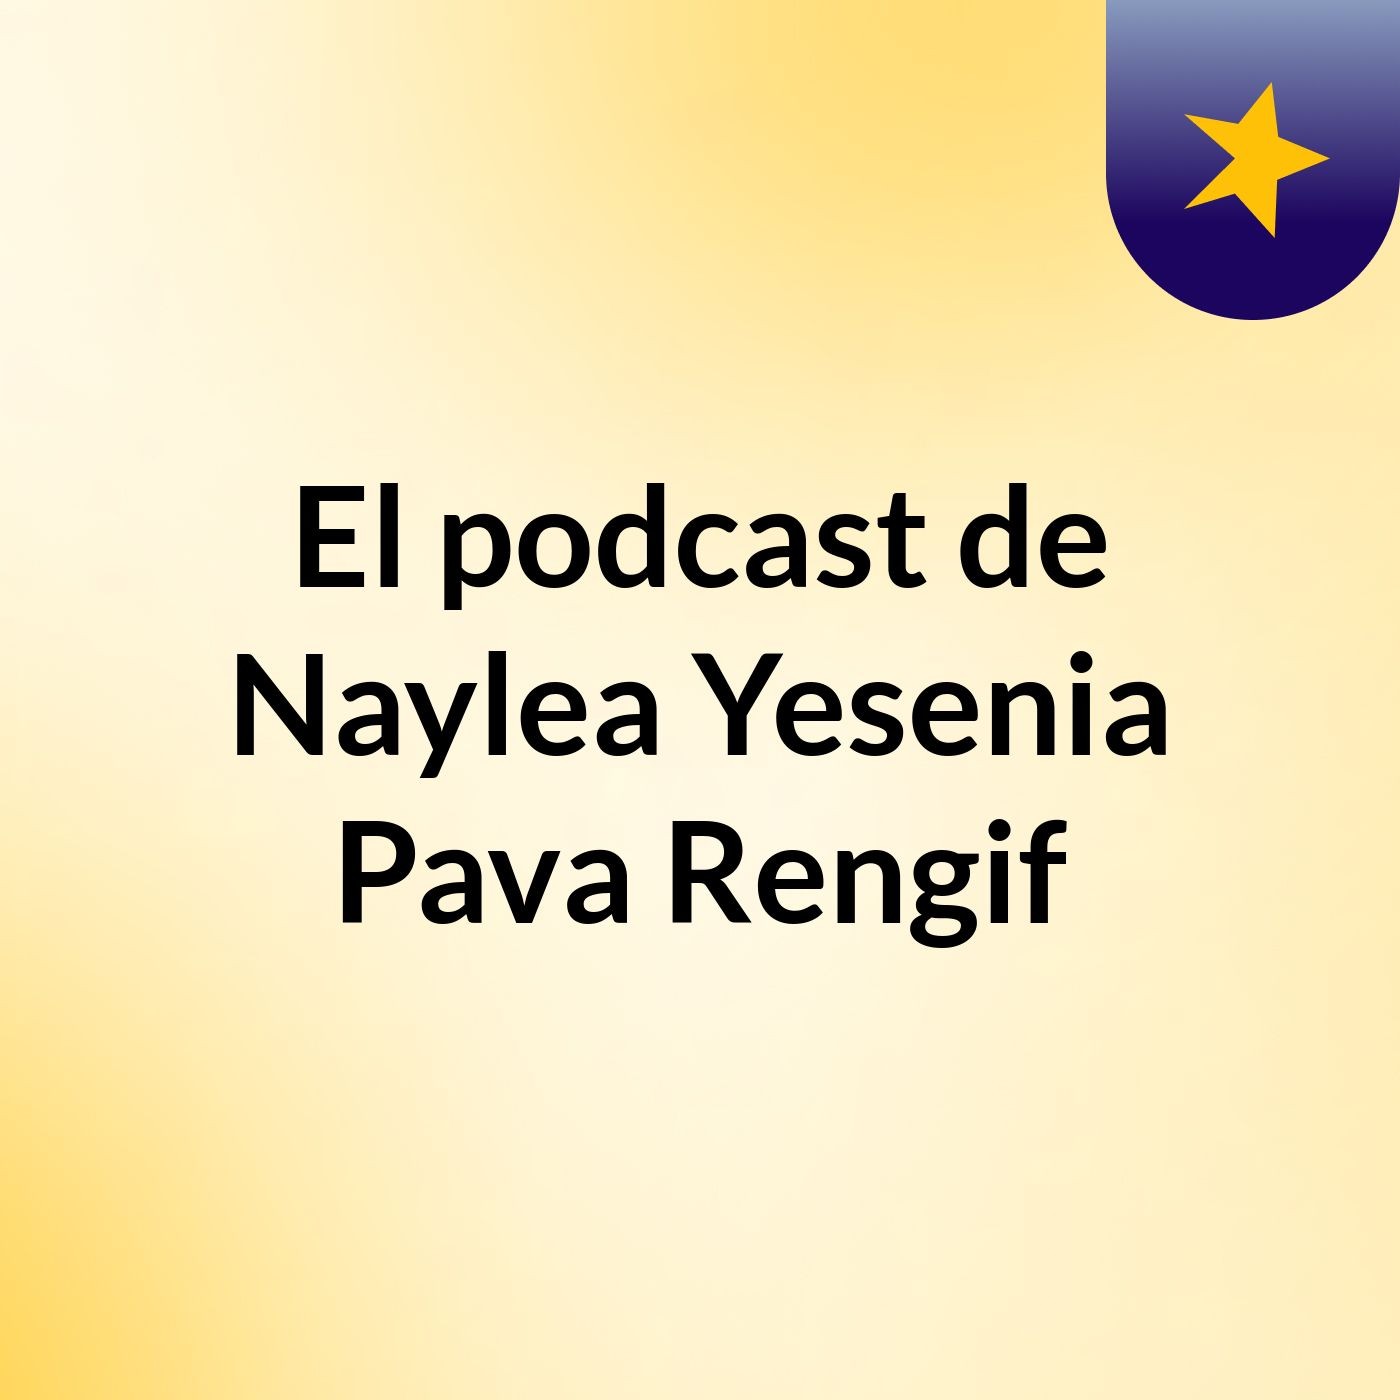 Episodio 8 - El podcast de Naylea Yesenia Pava Rengif